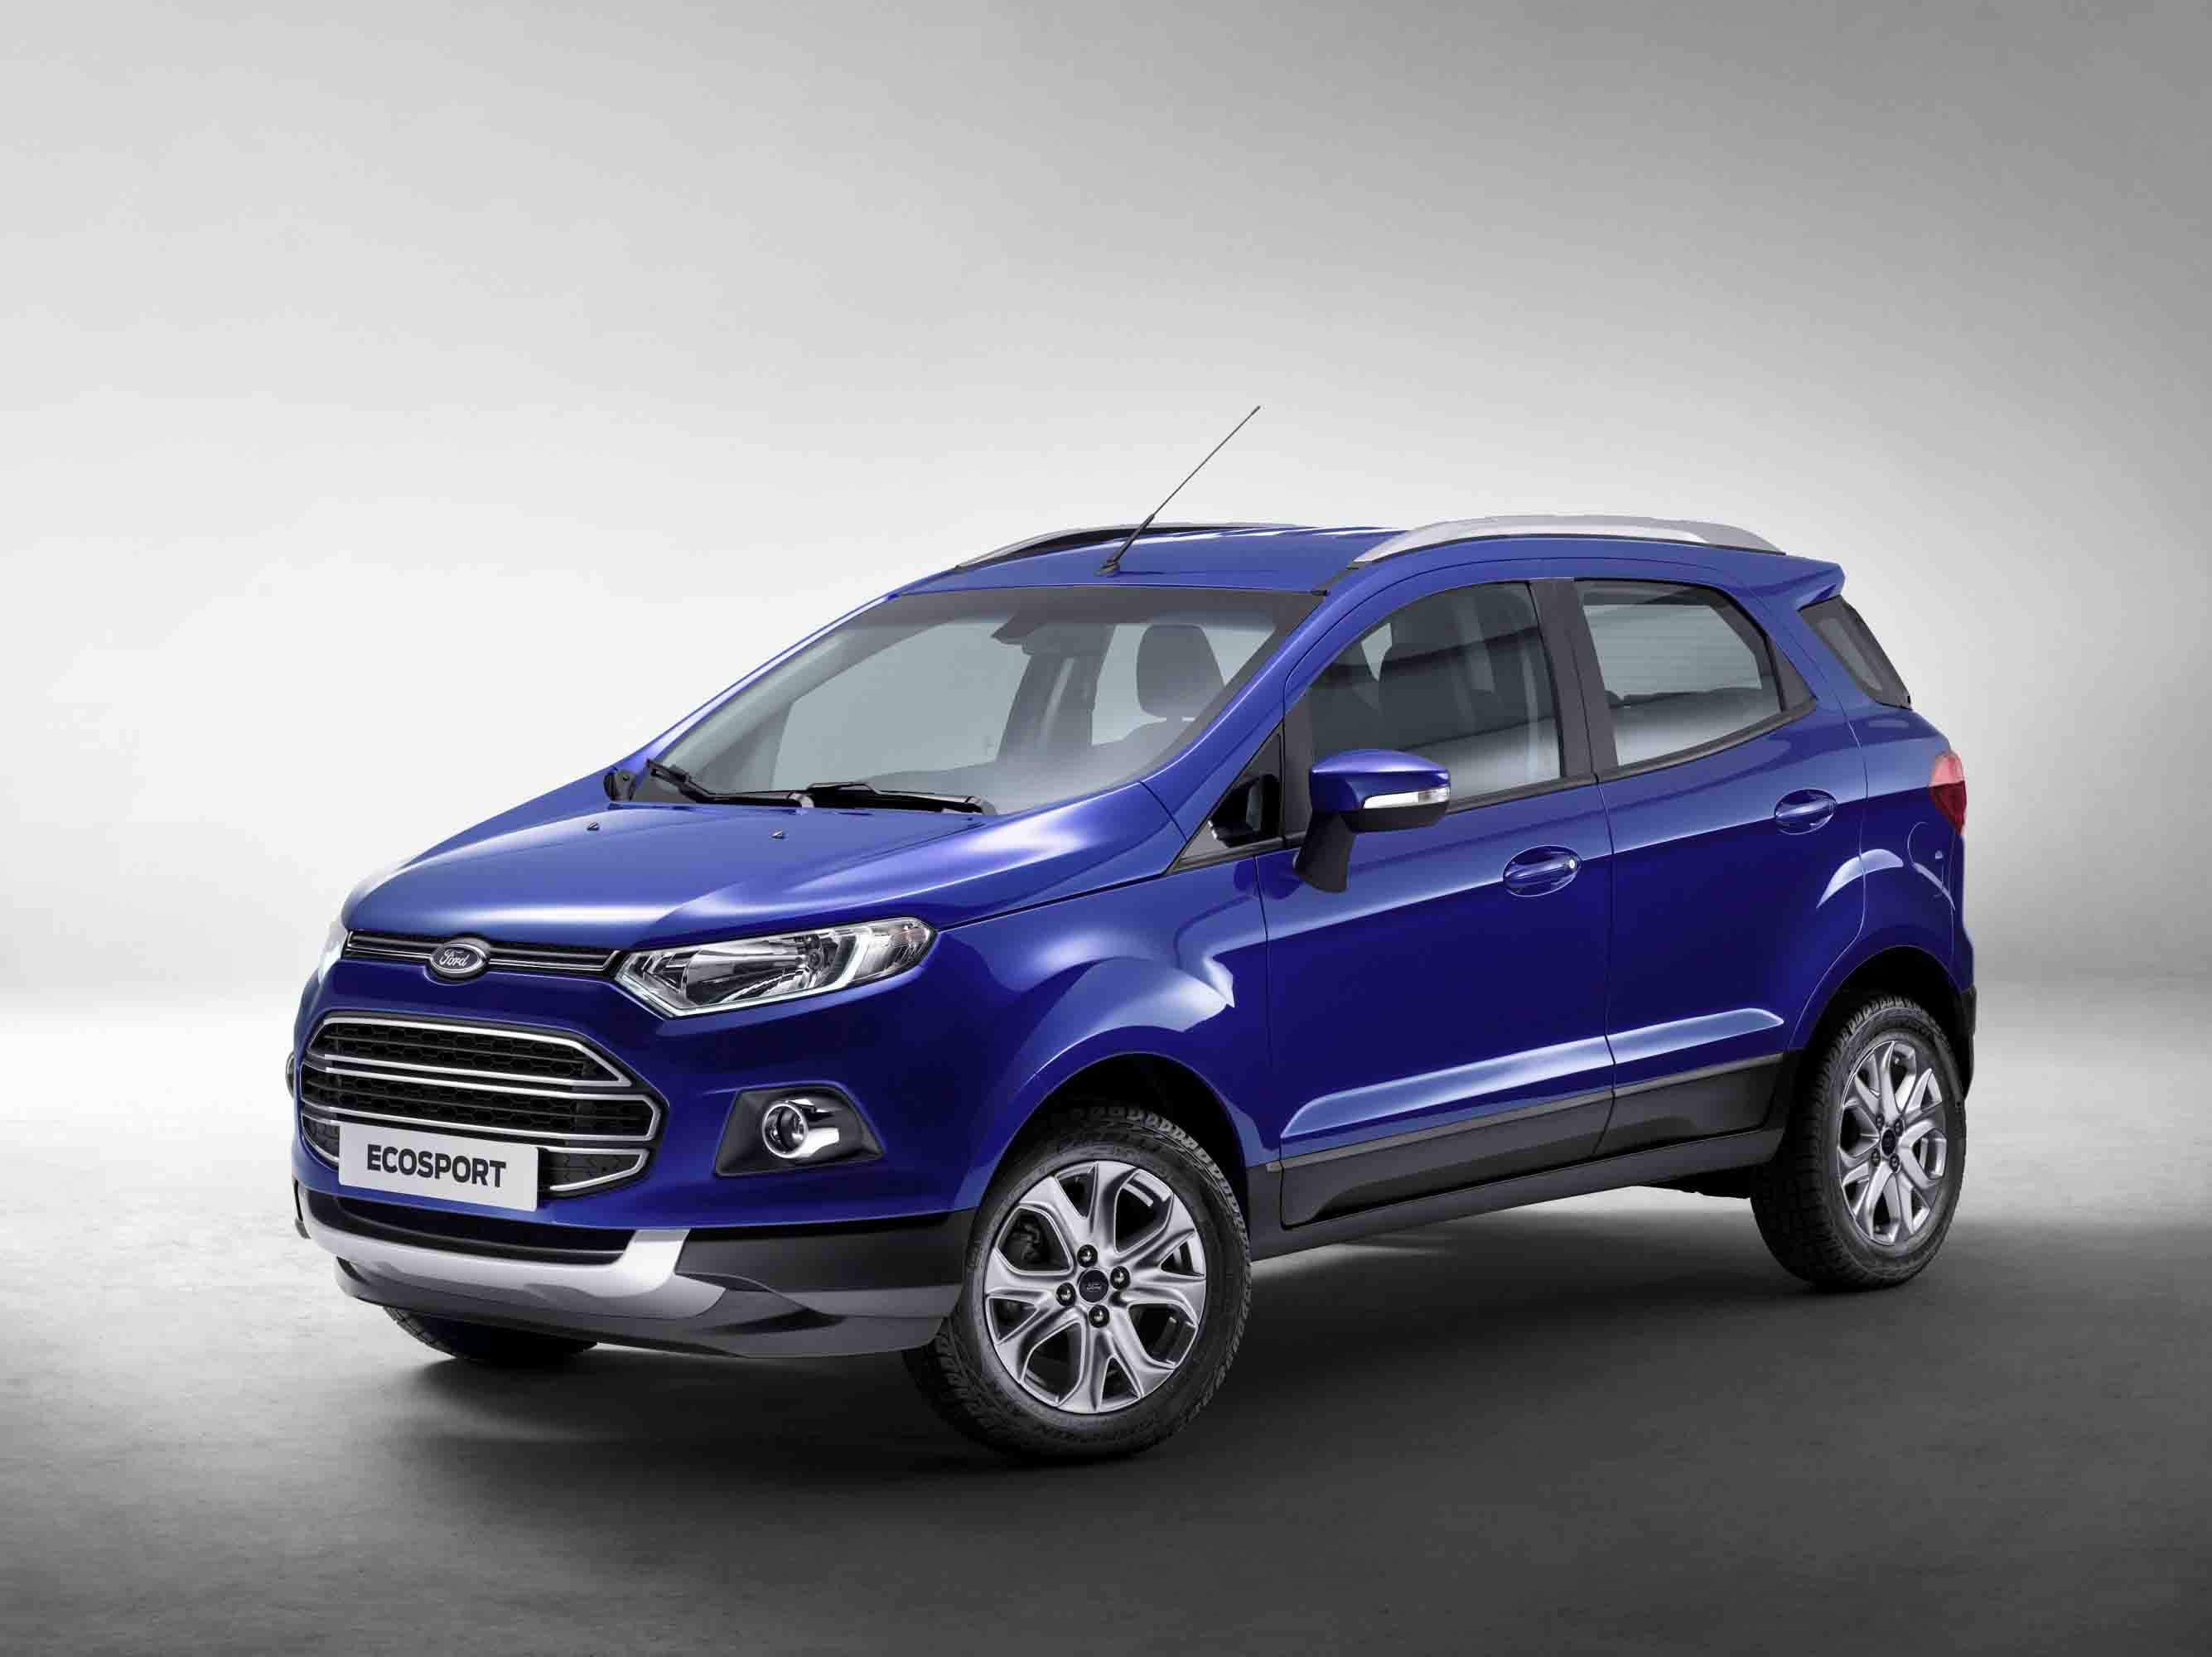 Ford ecosport the automotive india #3